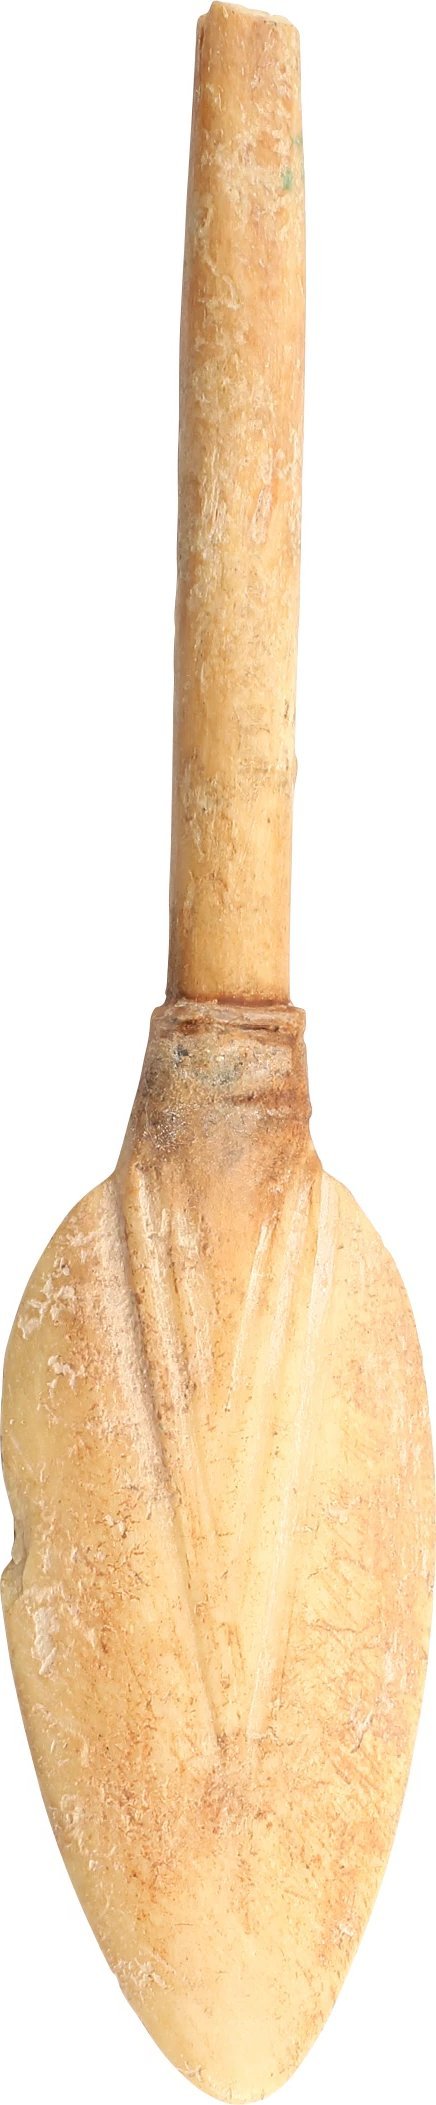 ANCIENT EGYPTIAN BONE SPOON. Coptic Period, 3rd-5th century AD - Fagan Arms